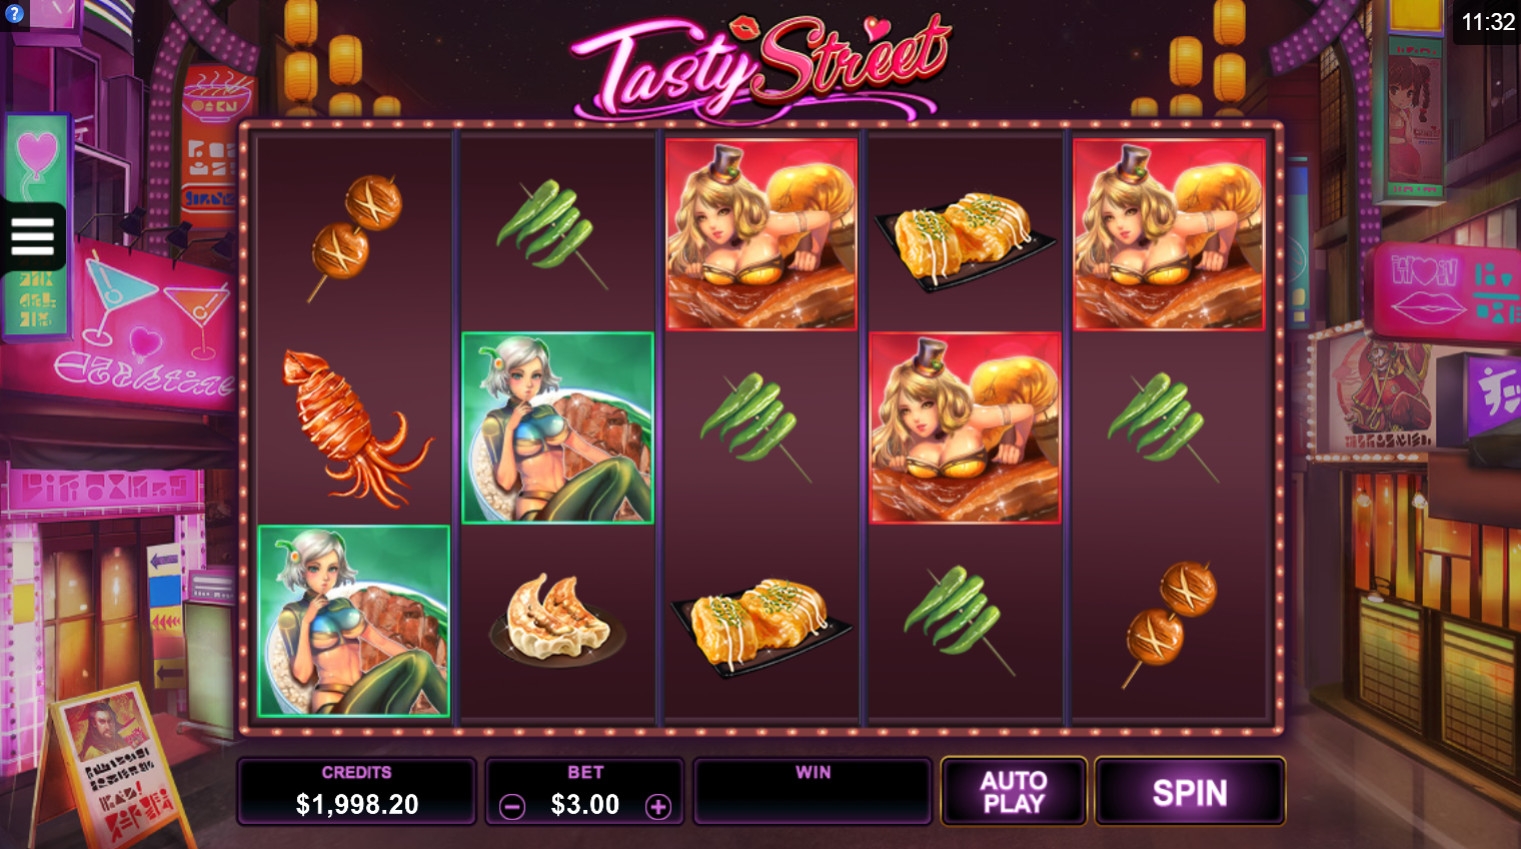 Tasty Street (Tasty Street) from category Slots